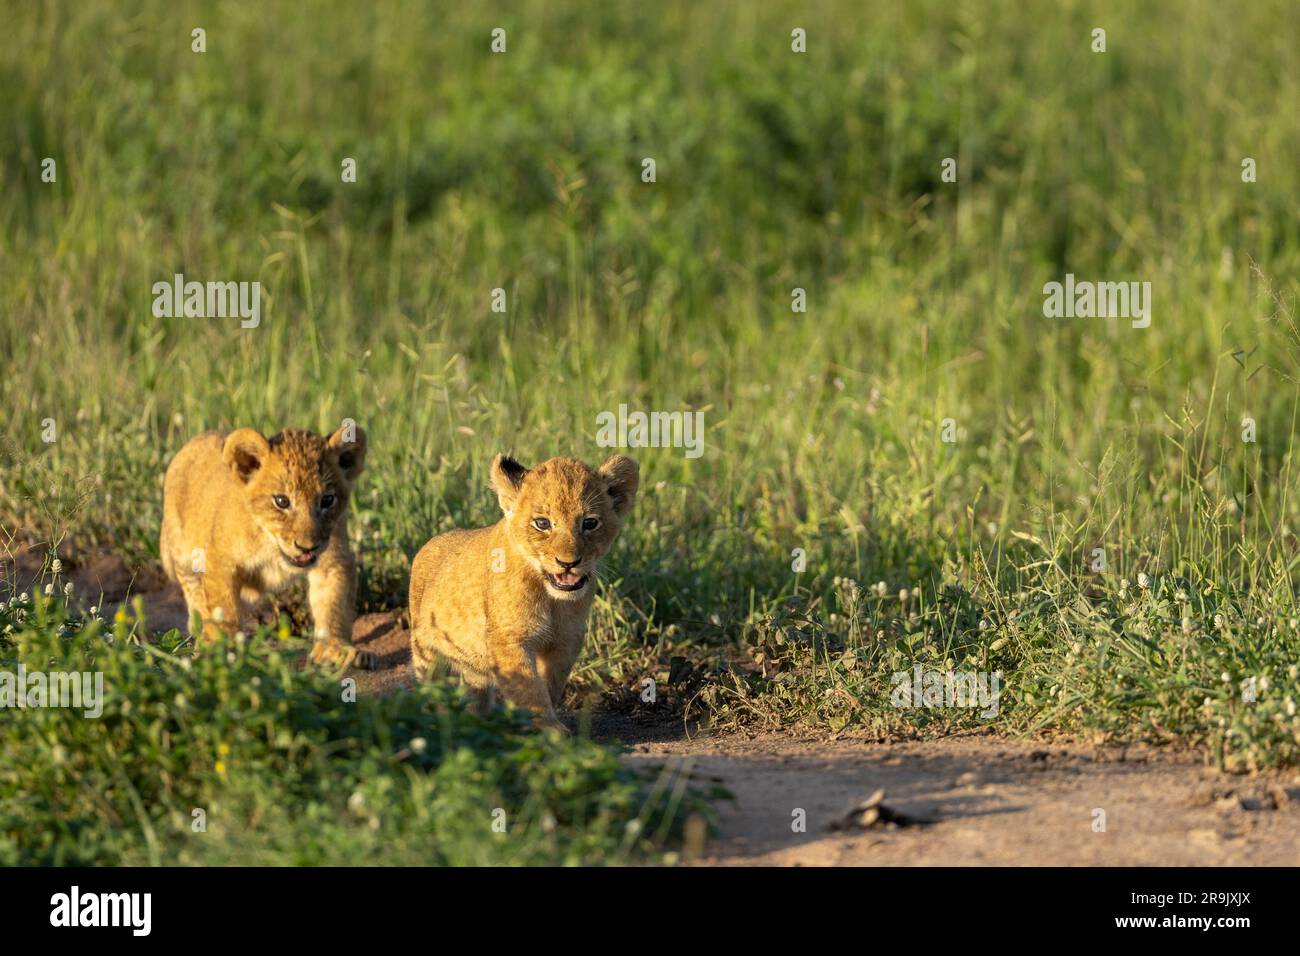 Two lion cubs, Panthera leo, walk through grass, in golden light. Stock Photo